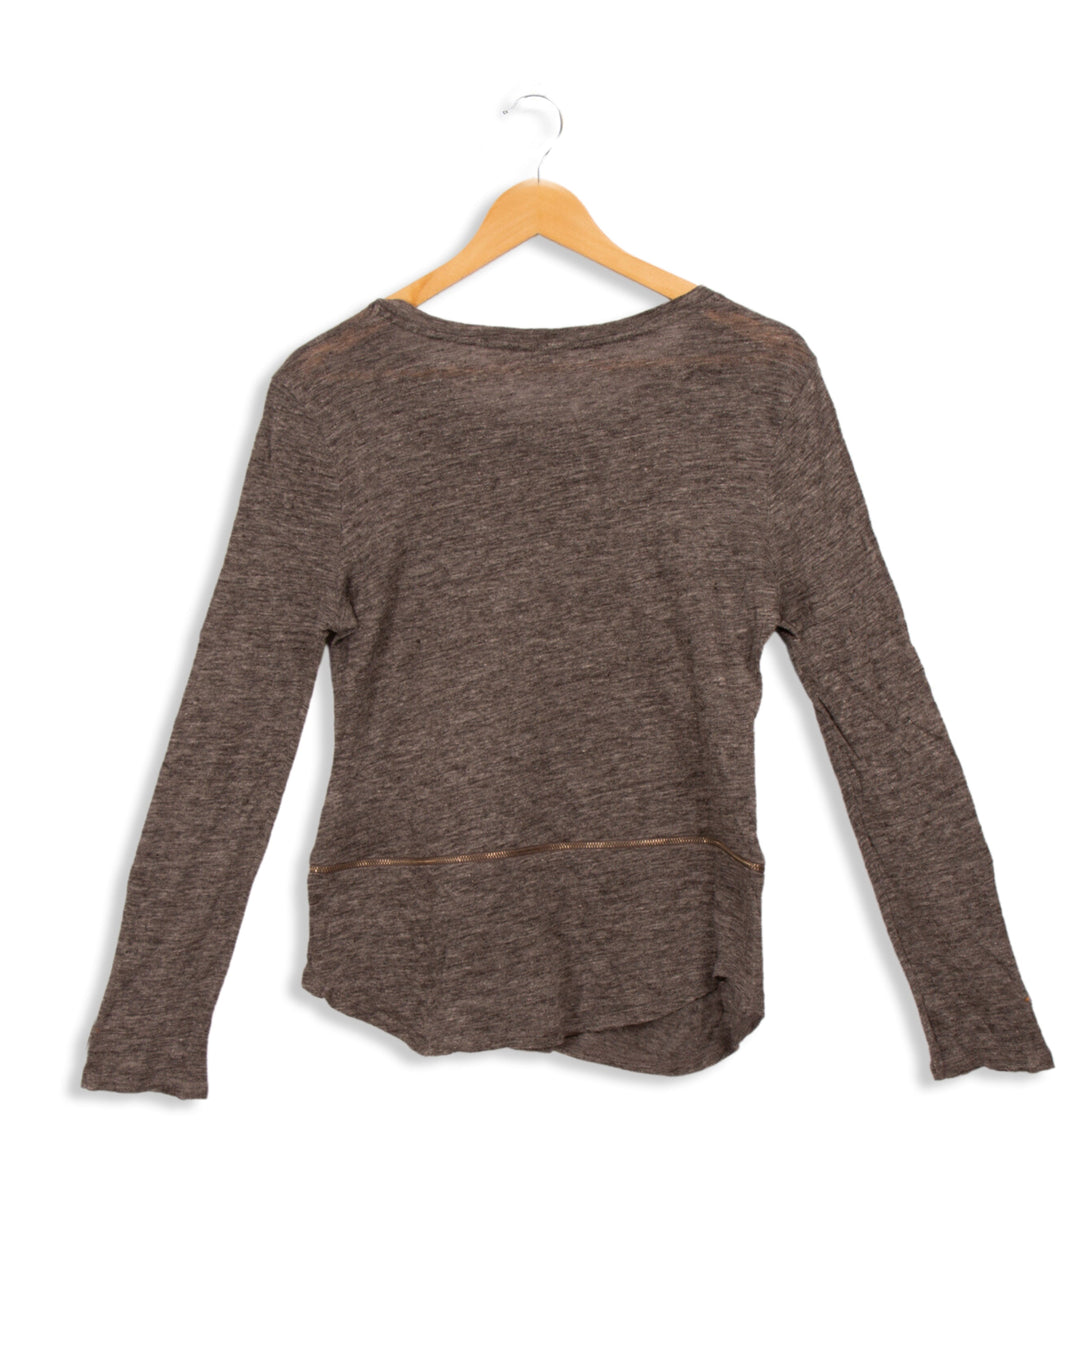 Claudie Pierlot heather gray sweater - T3